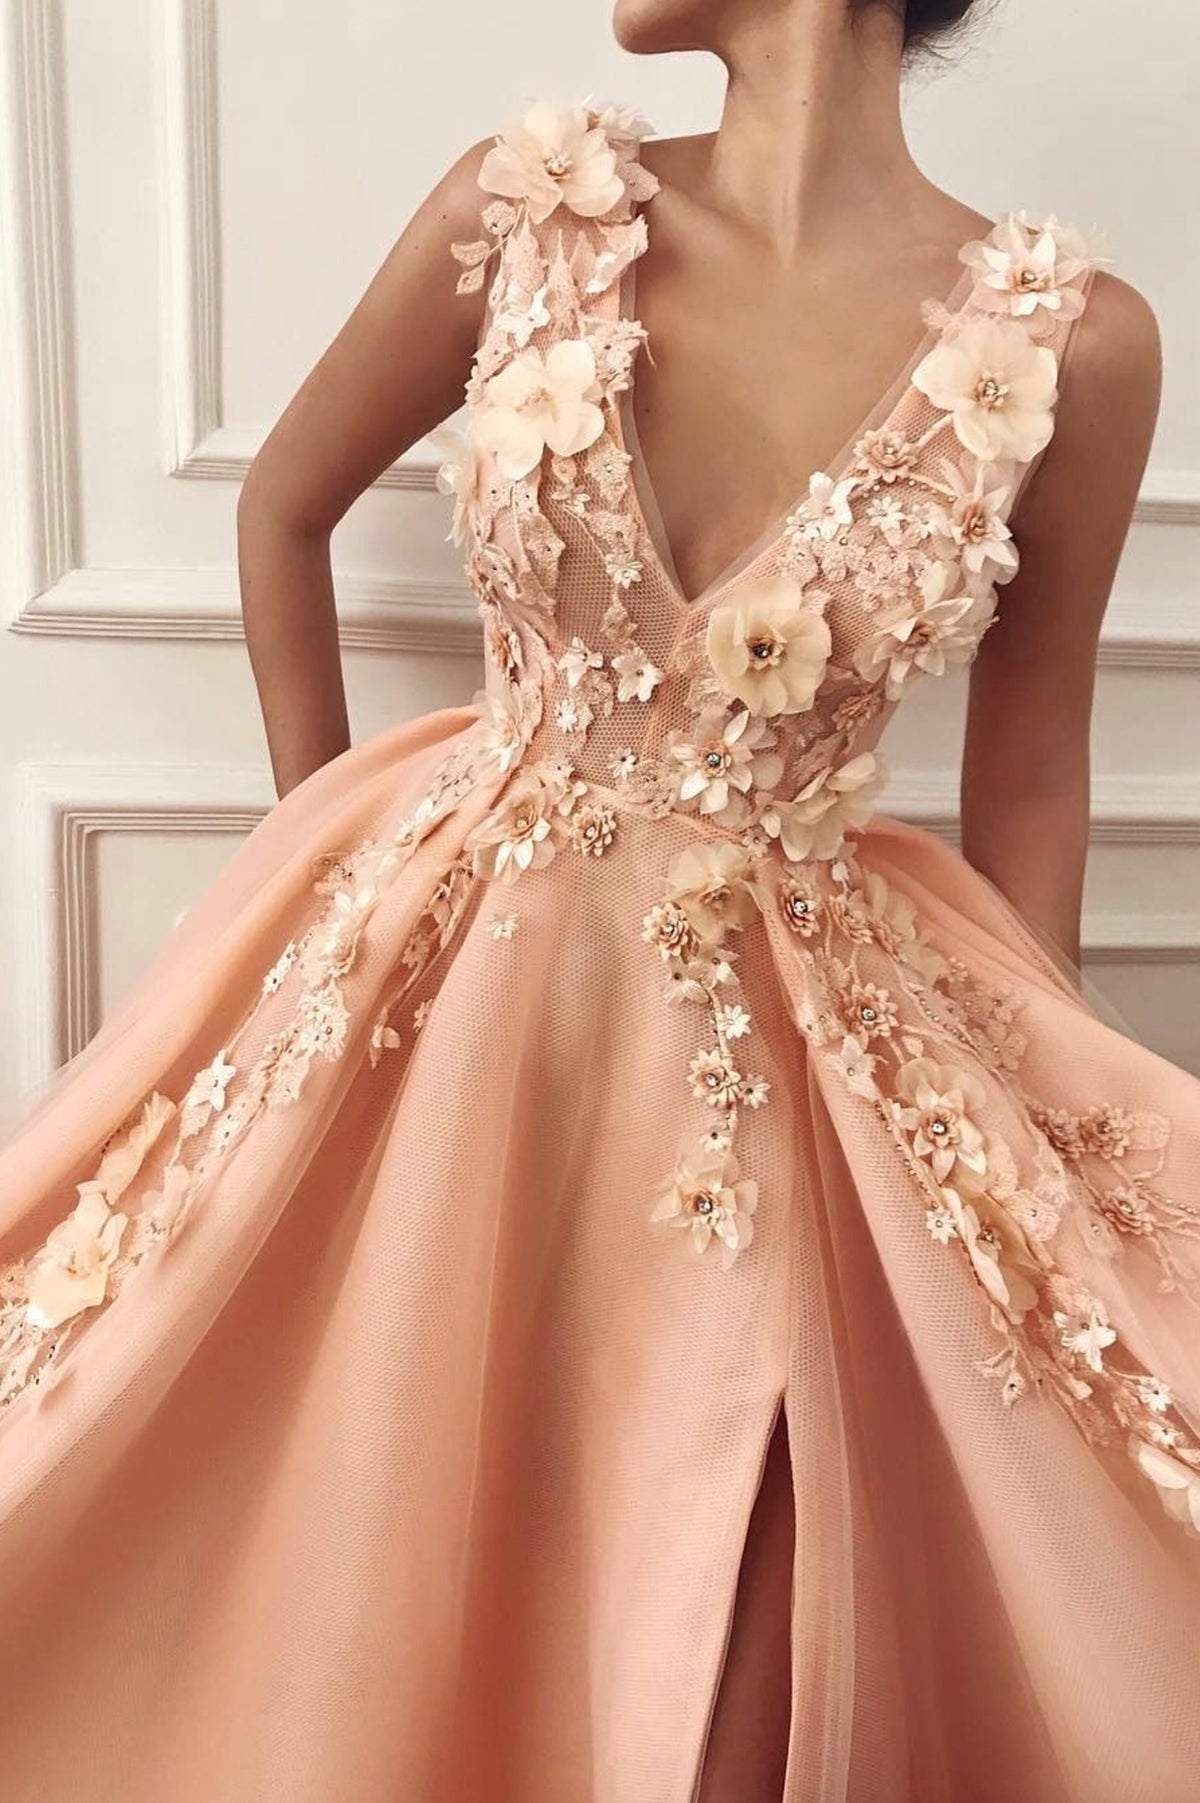 A-Line Tulle Long Prom Dress, Blush V-Neck Lace Evening Formal Dress